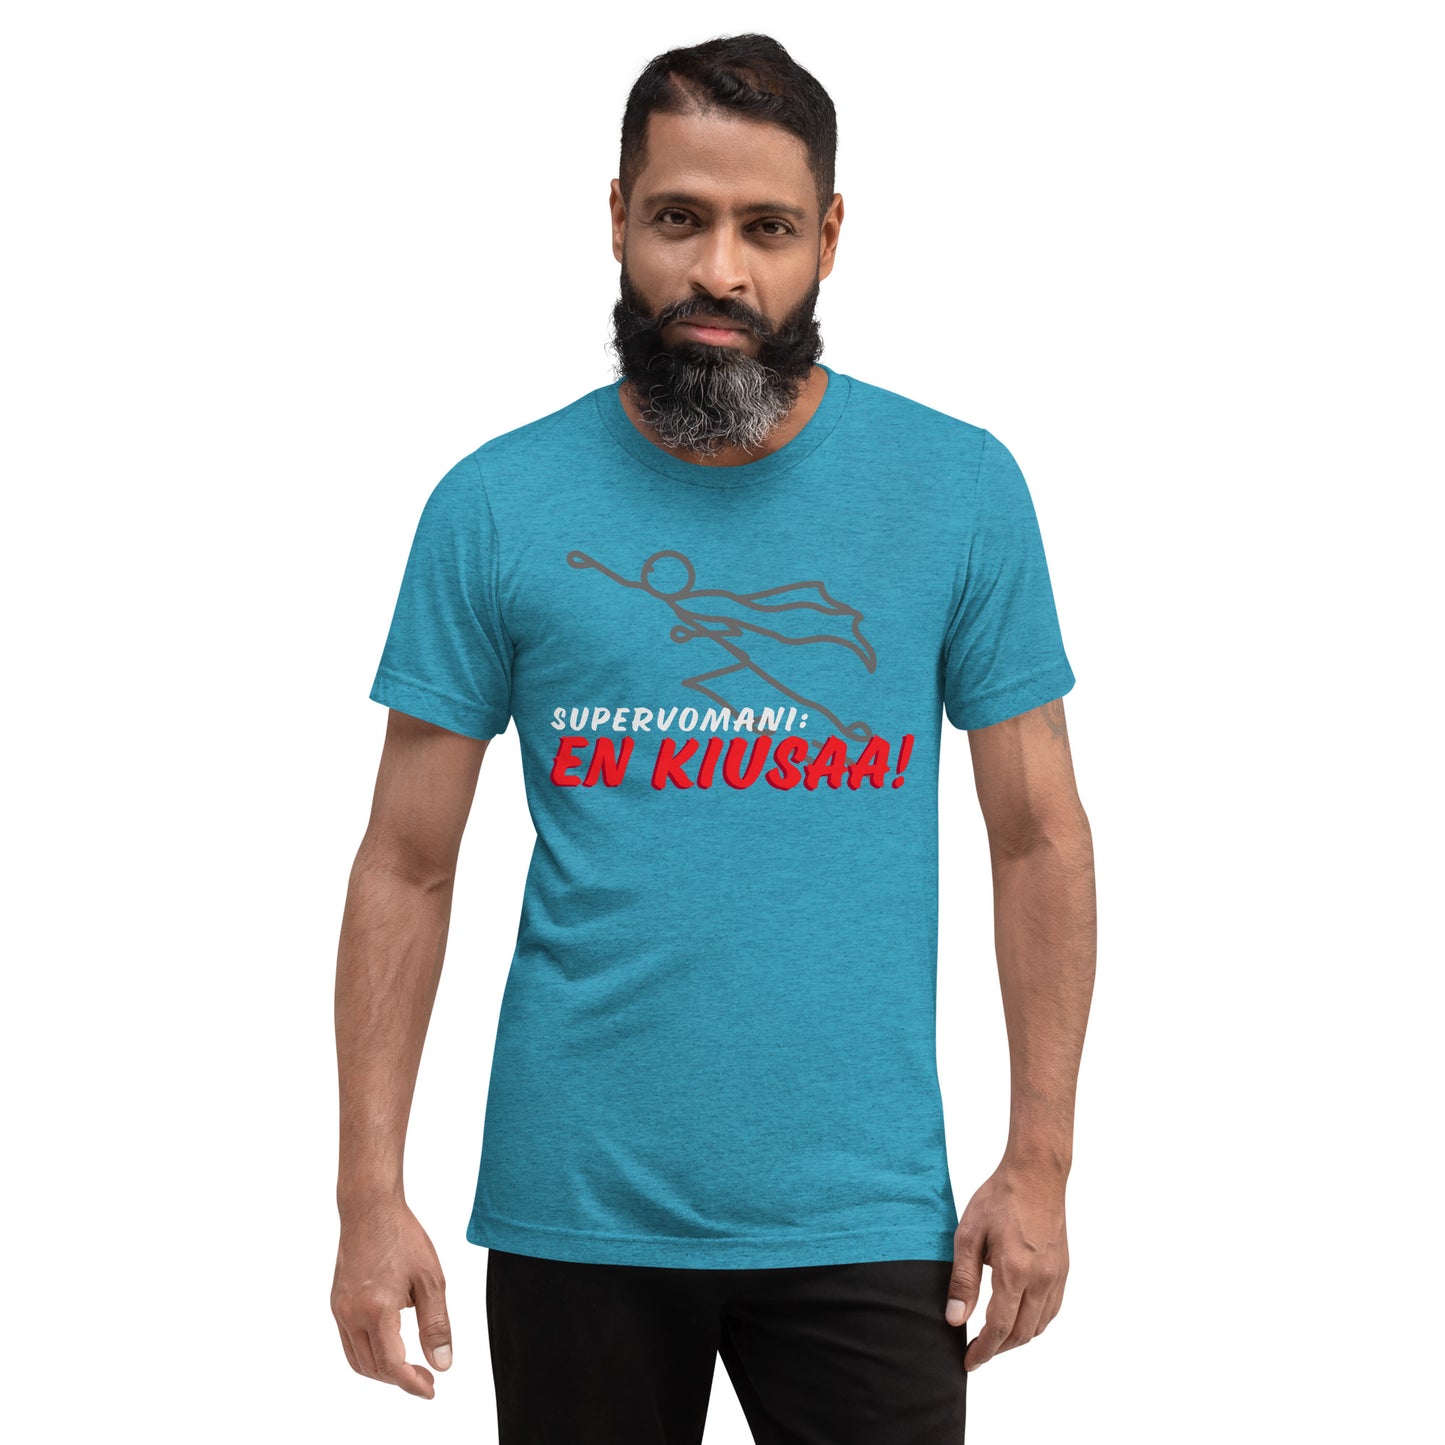 "I don't bully" unisex t-shirt